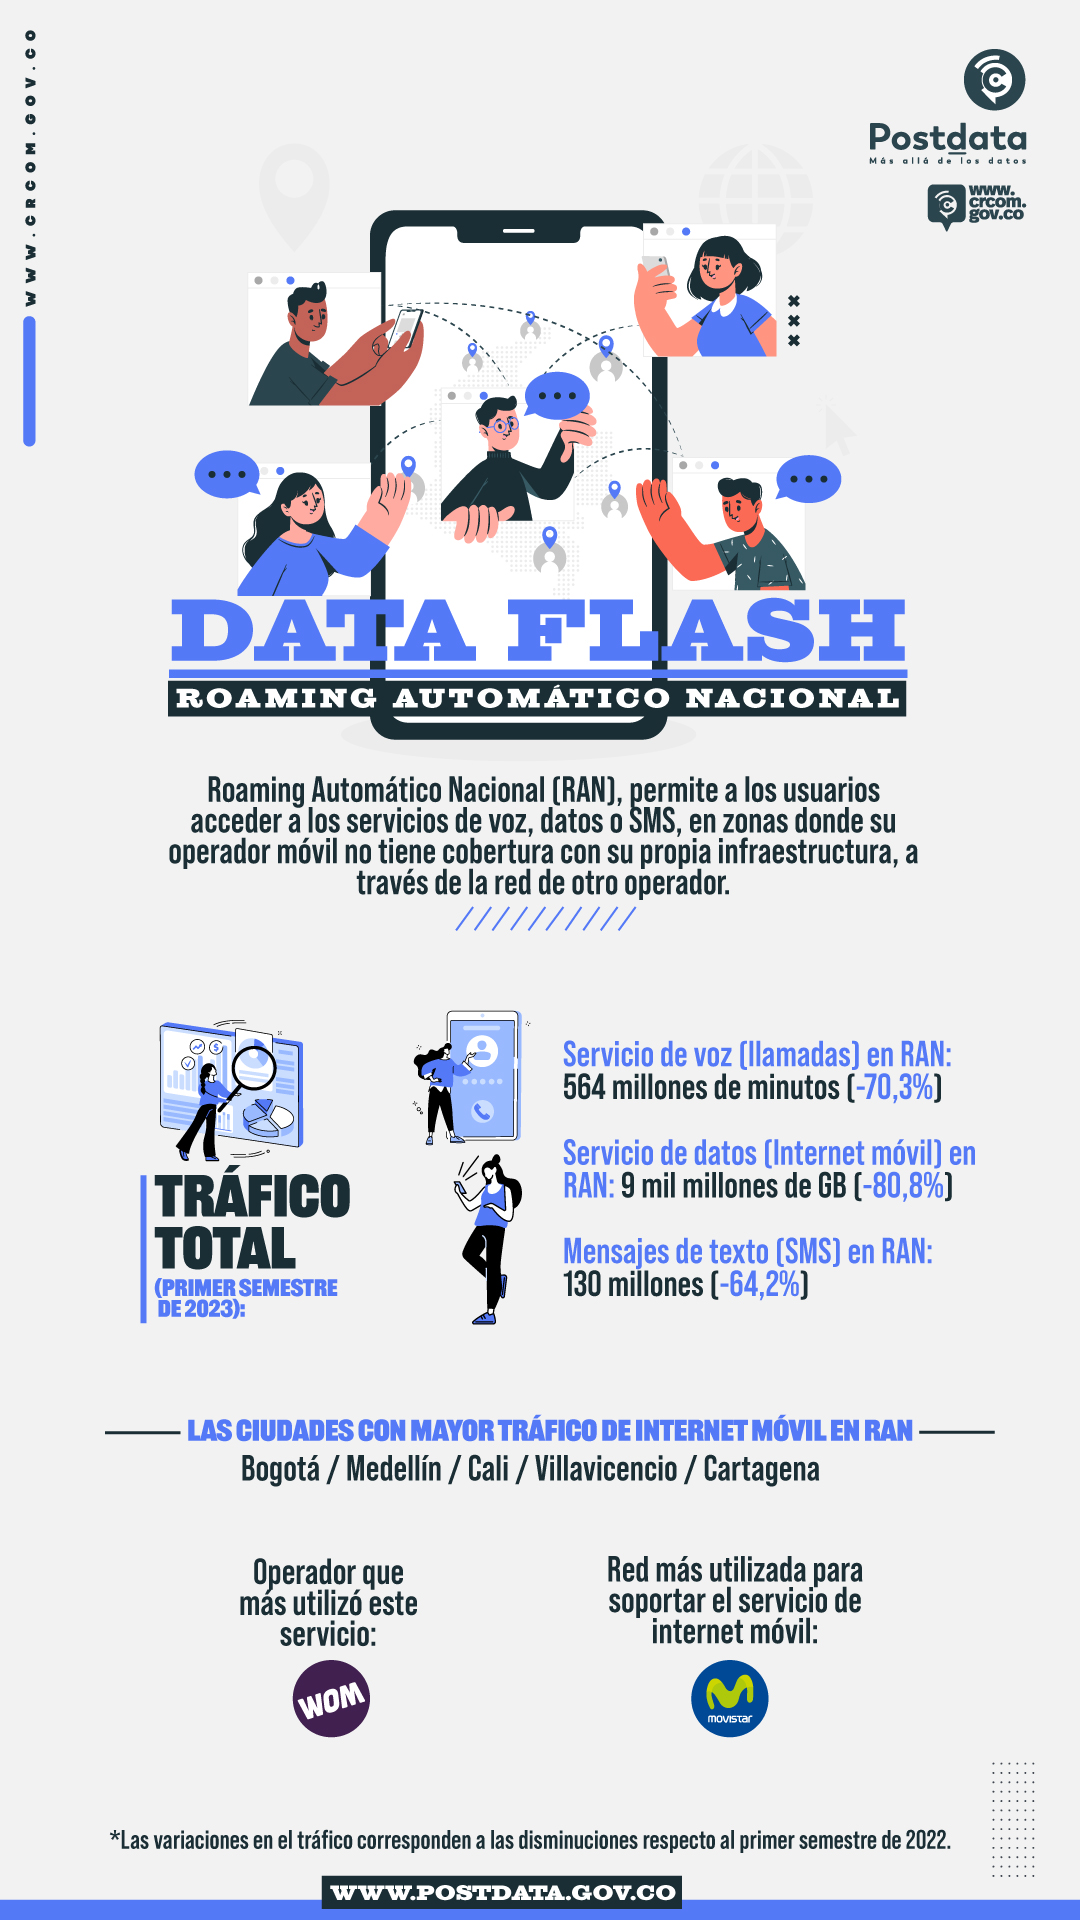 https://www.postdata.gov.co/dataflash/data-flash-2023-018-roaming-automatico-nacional